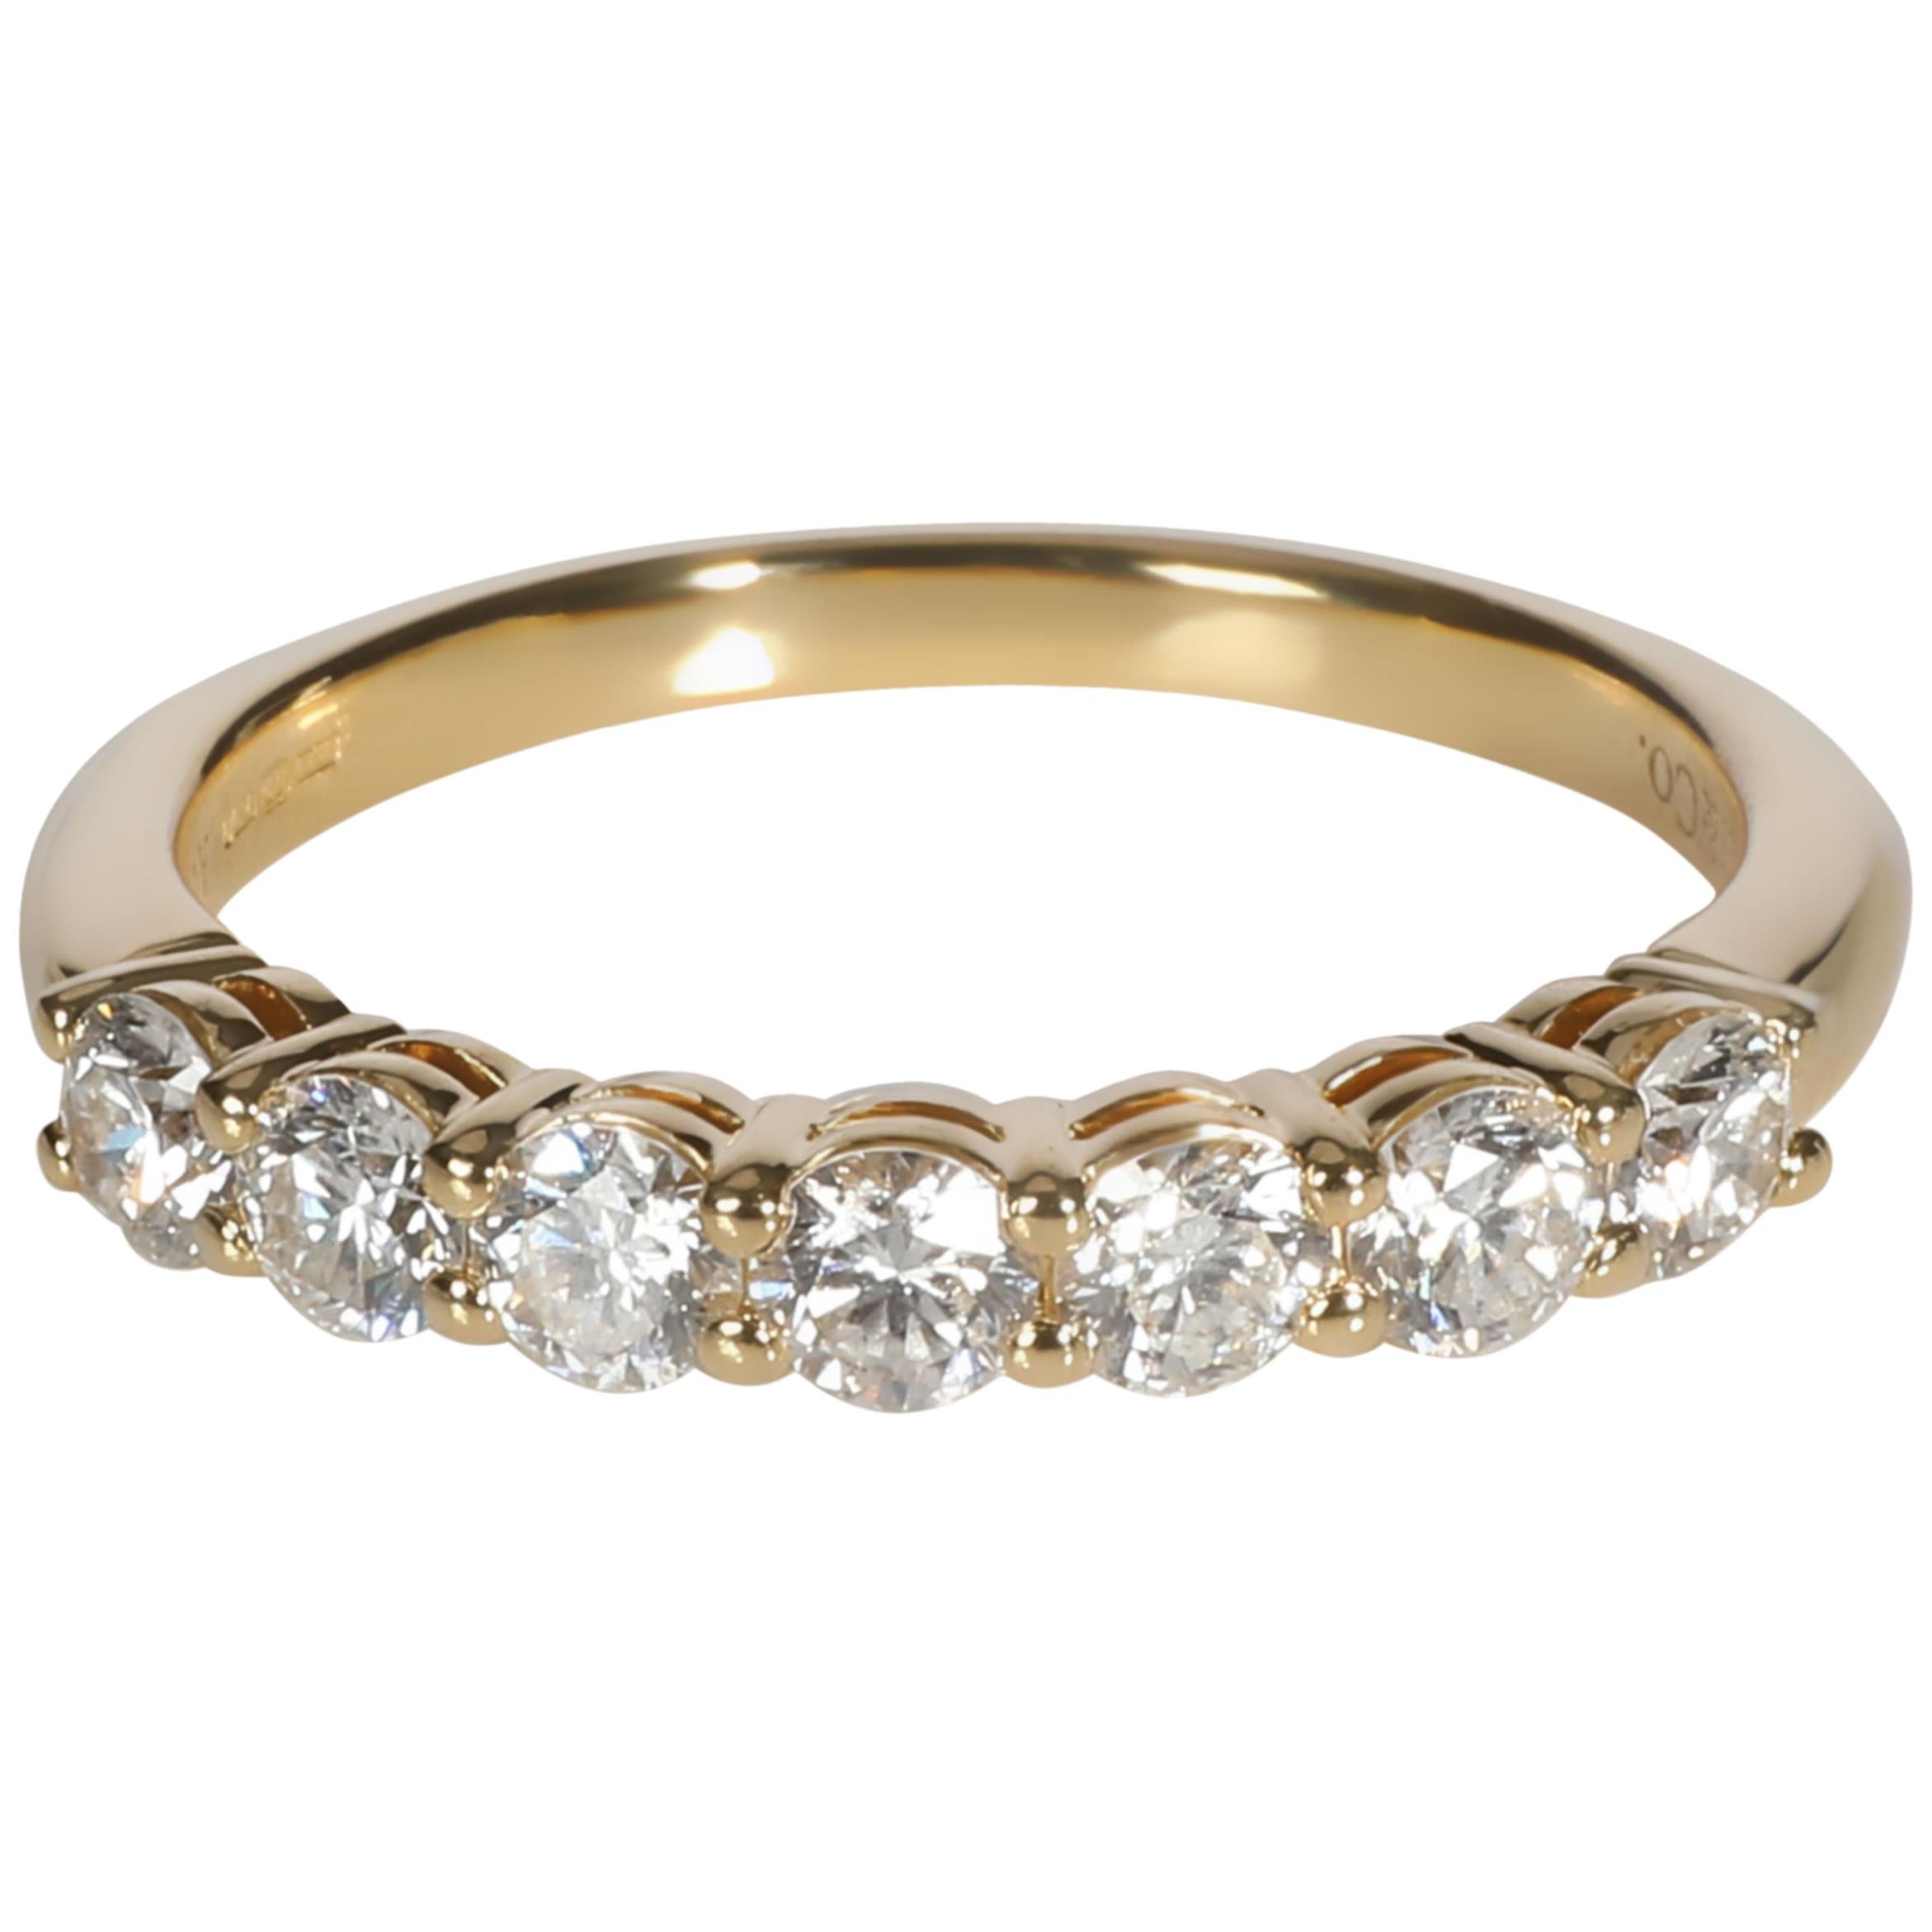 Tiffany & Co. Embrace Diamond Ring in 18 Karat Yellow Gold 0.67 Carat